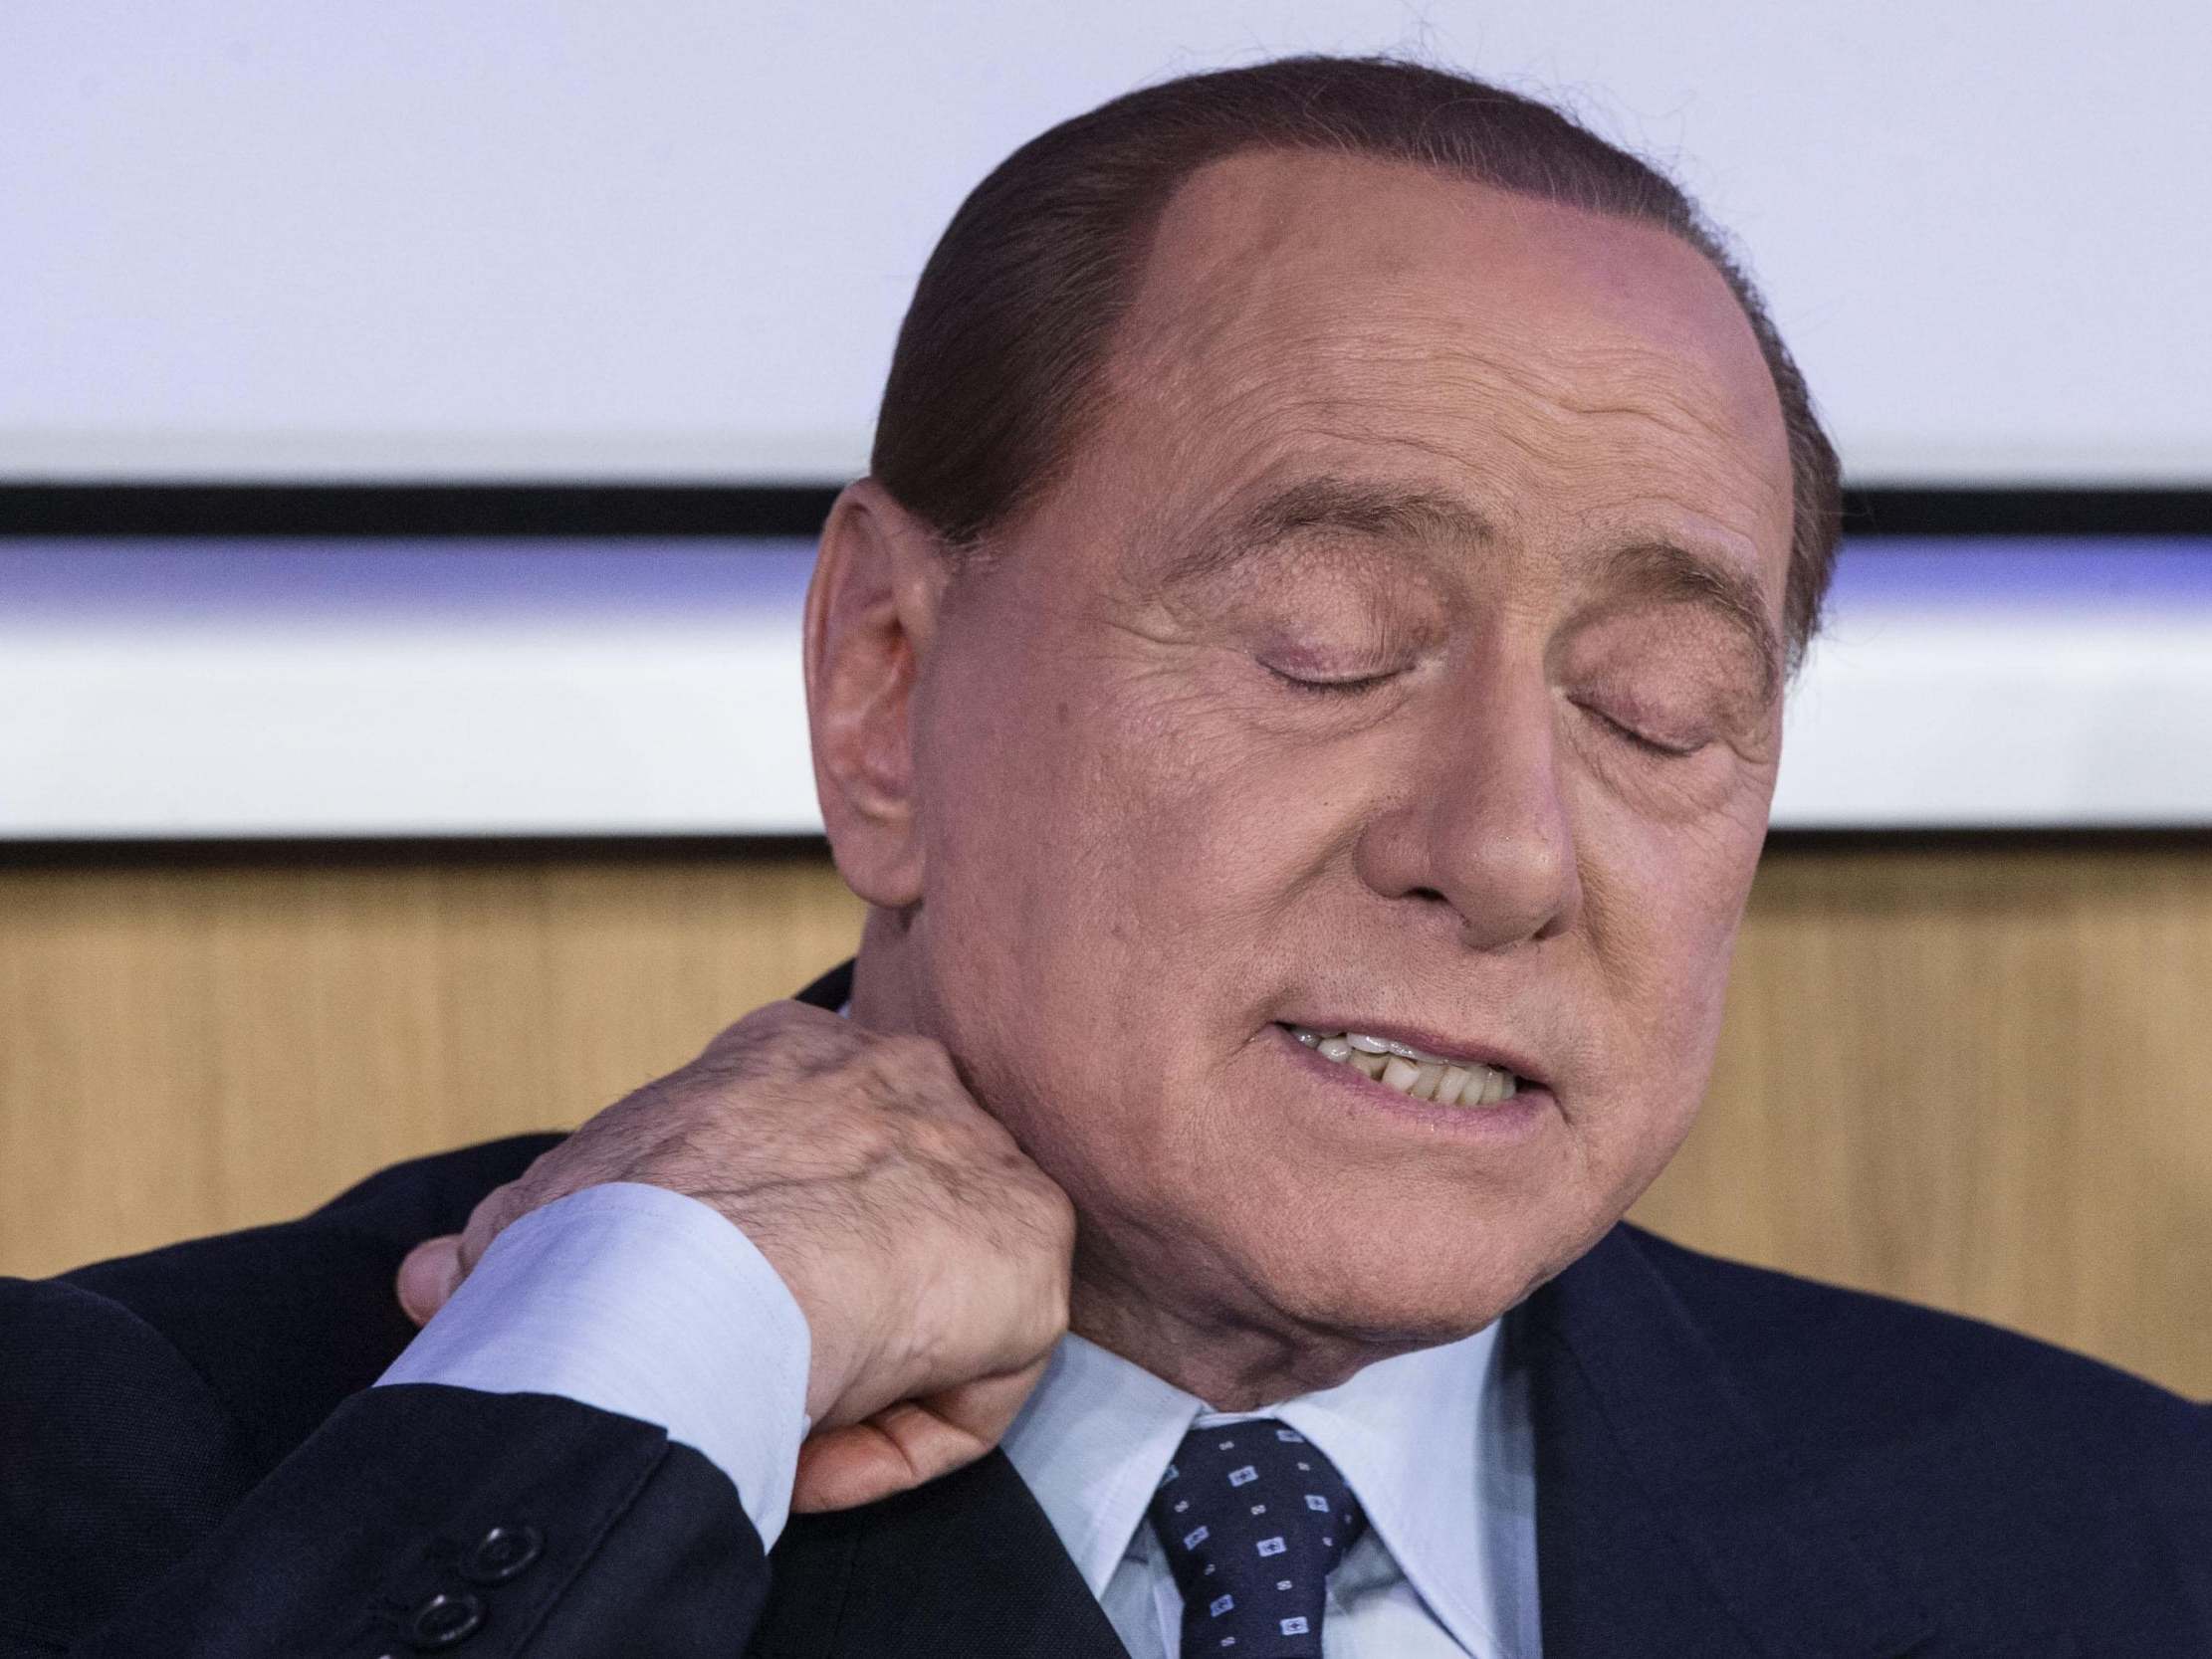 Silvio Berlusconi tested positive for coronavirus after a precautionary check, his office said